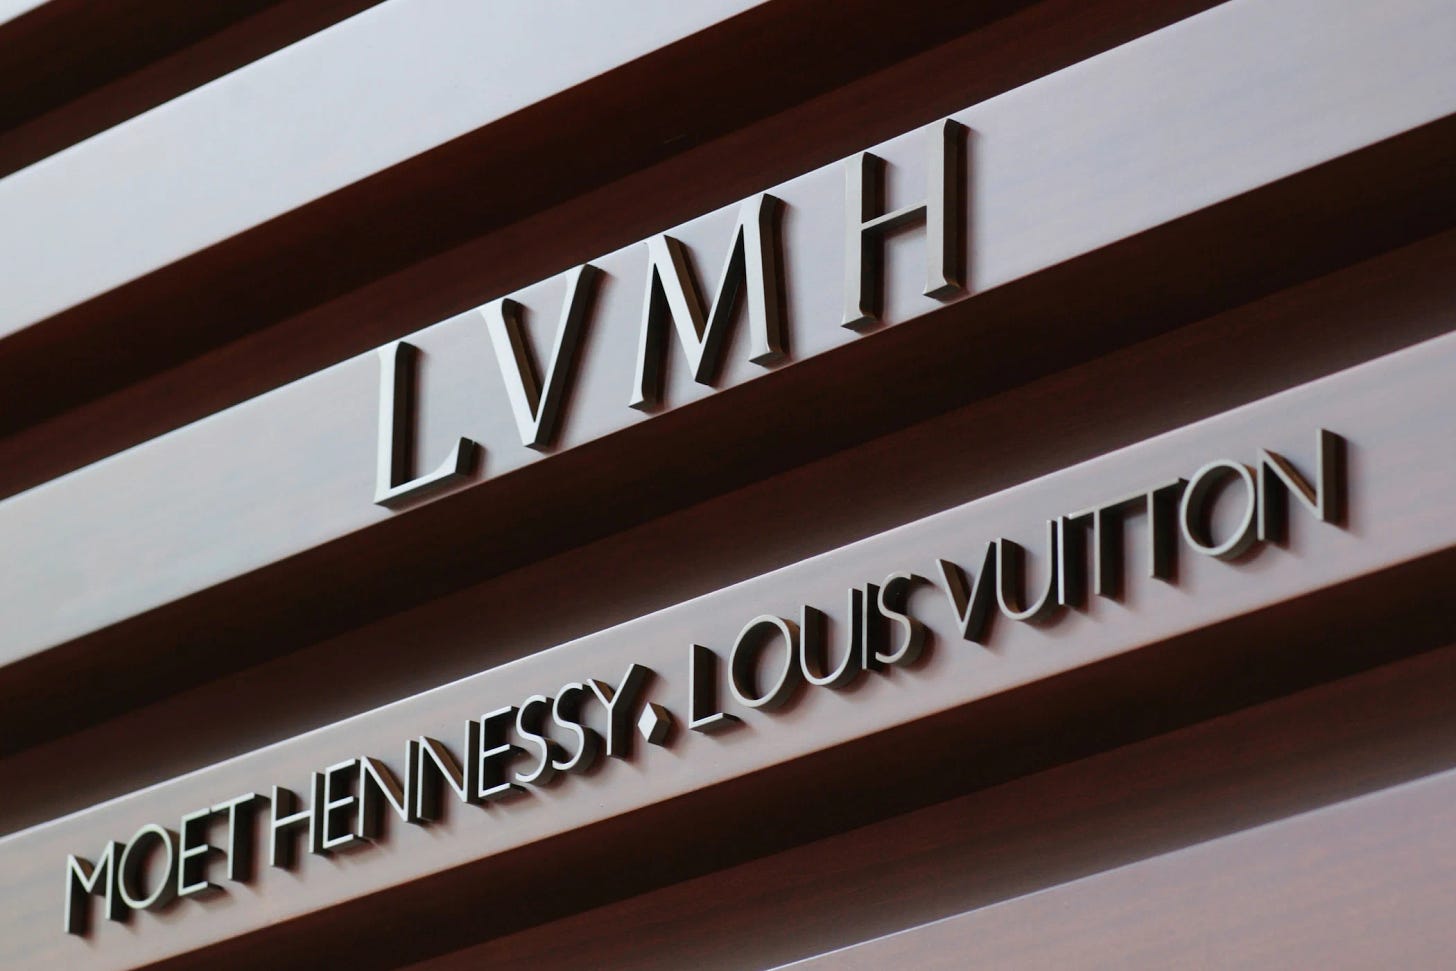 Louis Vuitton Reigns Supreme